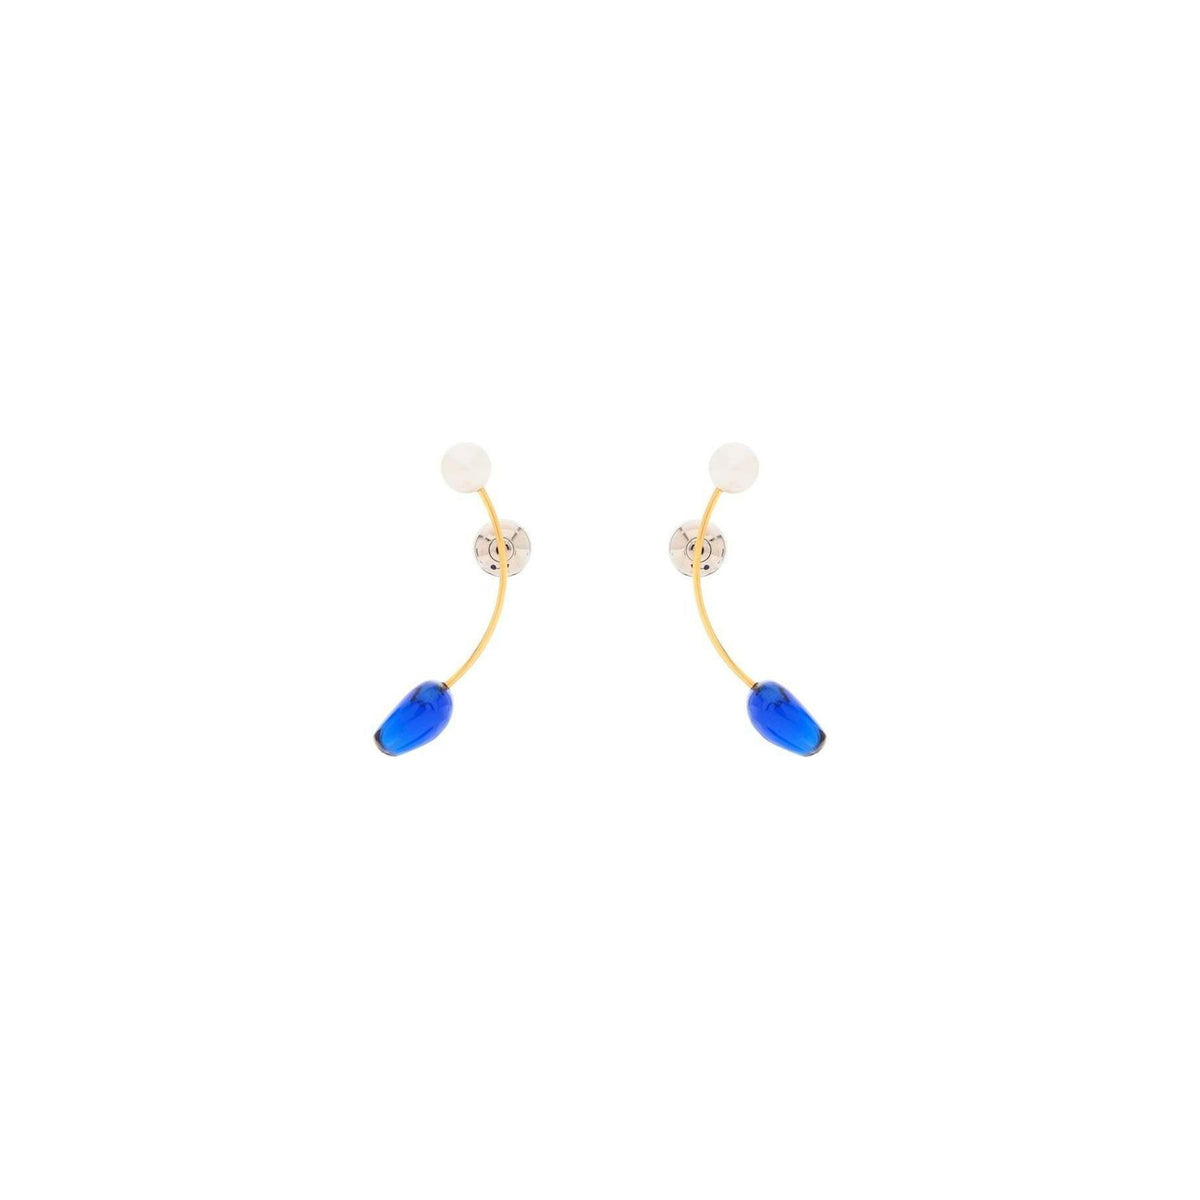 DRIES VAN NOTEN - Blue Earrings With Pearls And Stones - JOHN JULIA